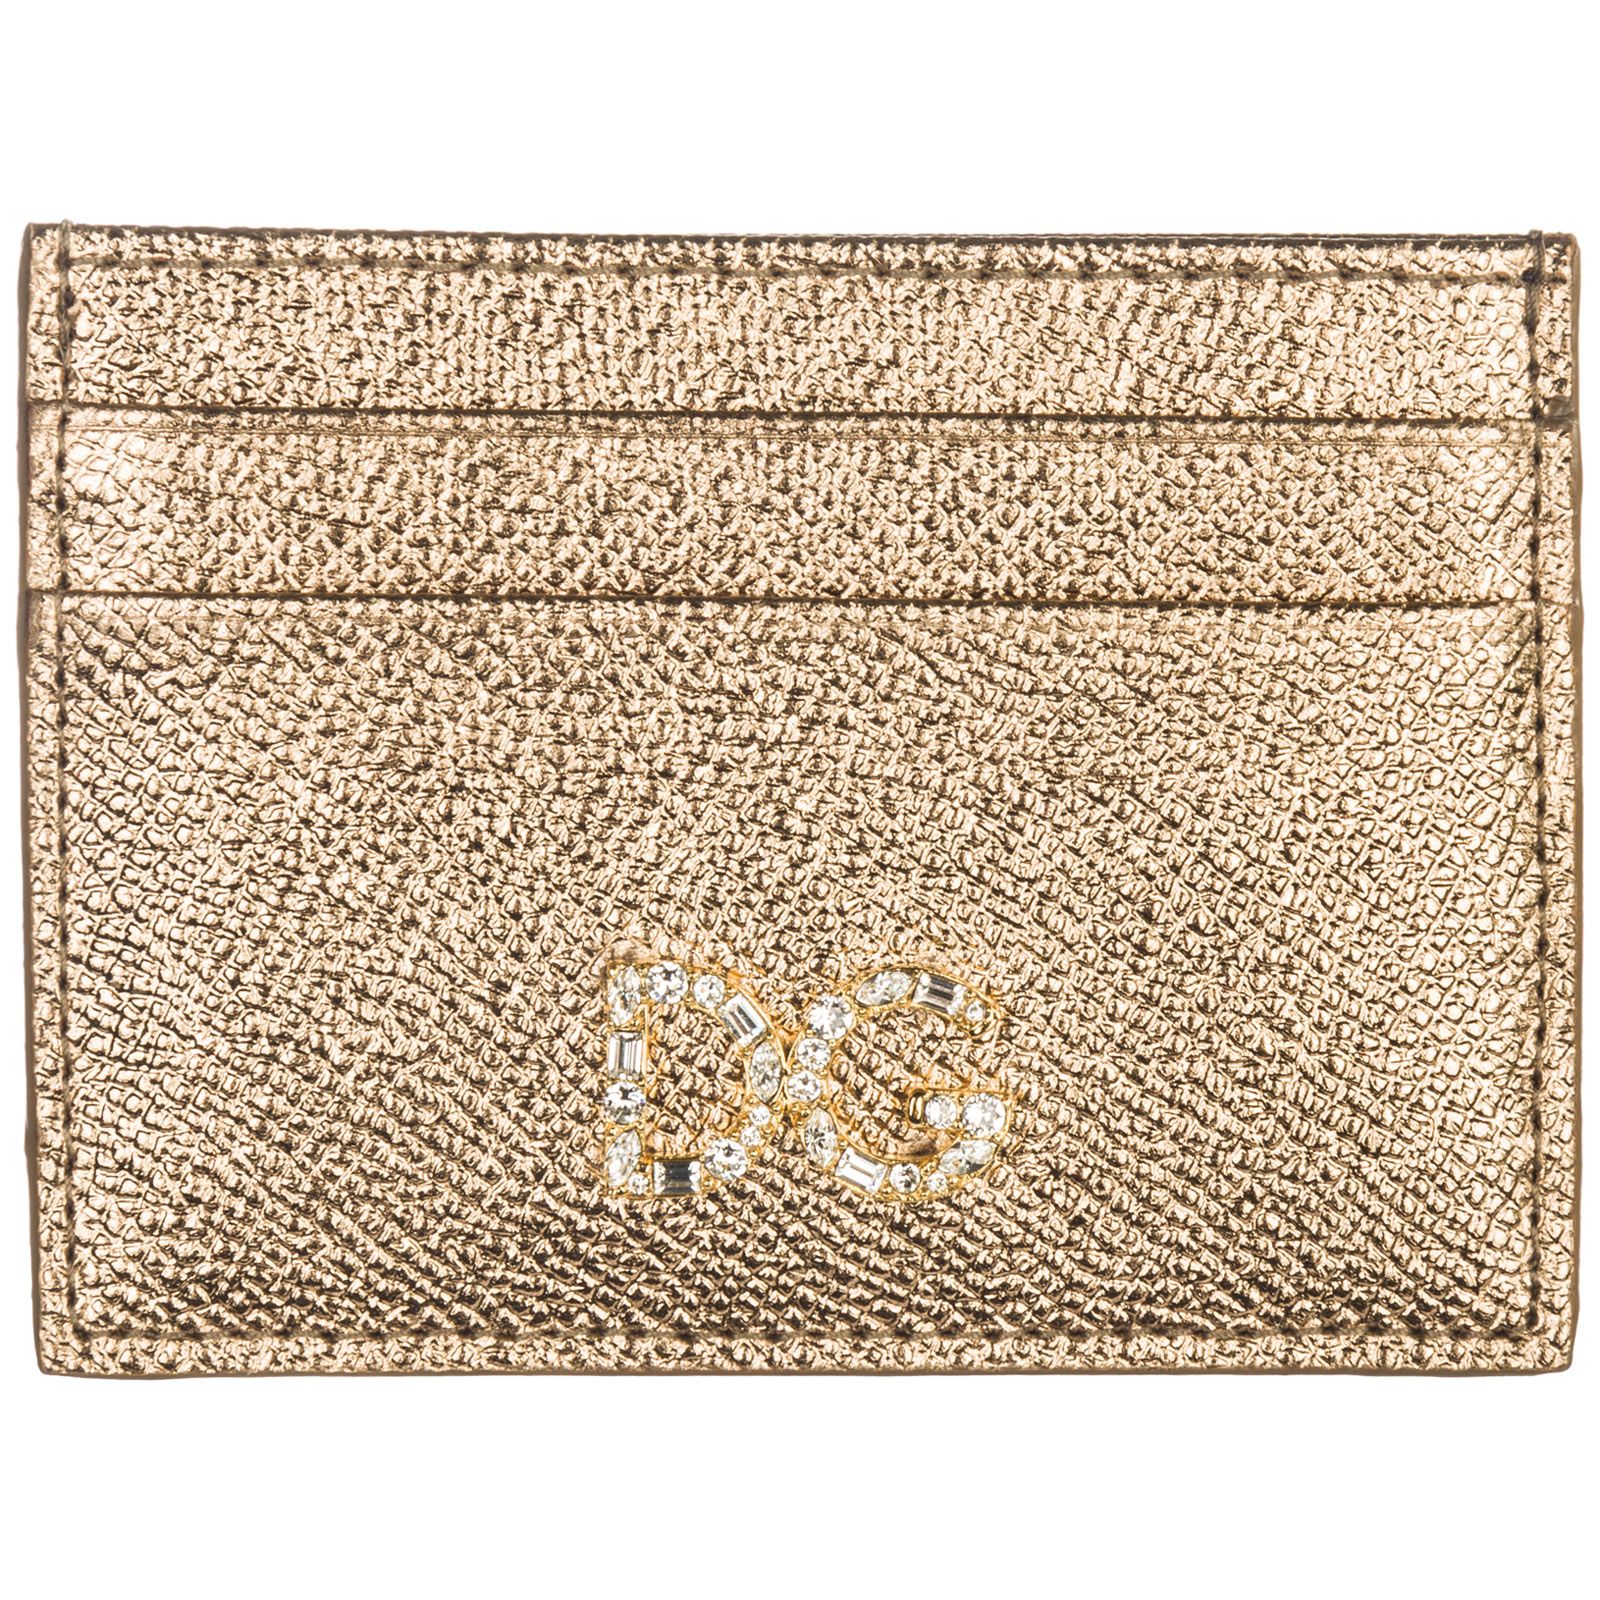 DOLCE & GABBANA Dolce & Gabbana  Genuine Leather Credit Card Case Holder Wallet,10832727